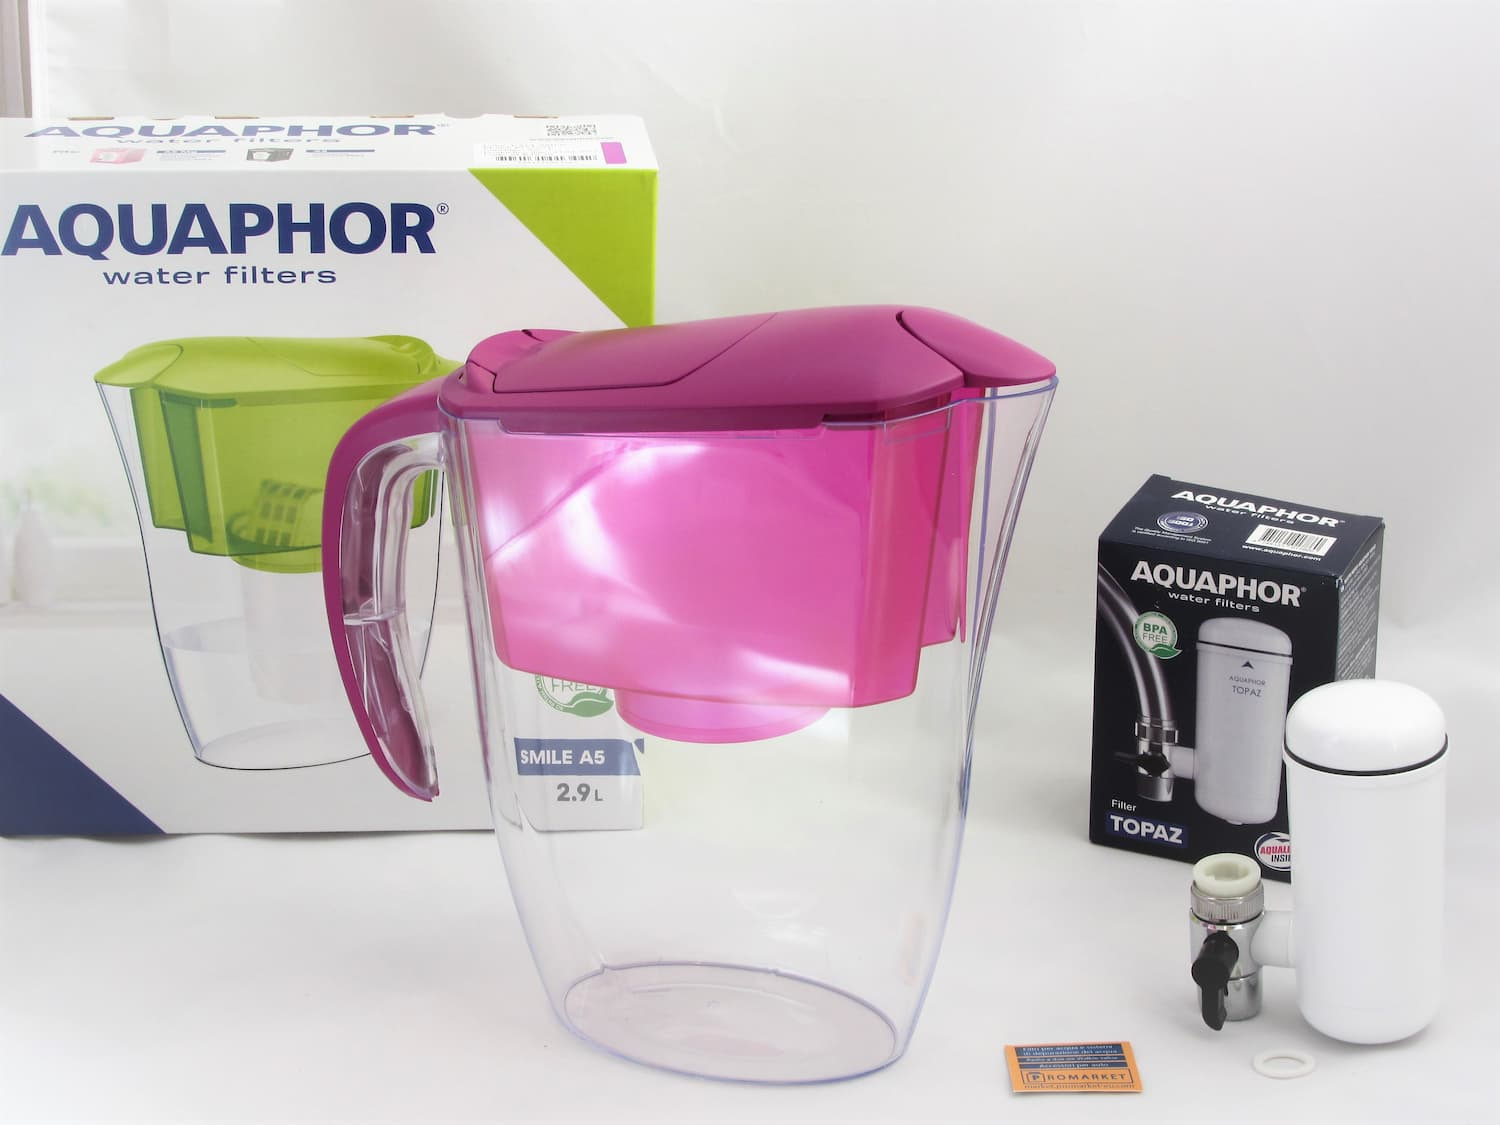 Water filtering pitcher Aquaphor Smile and tap water filter Aquaphor Topaz